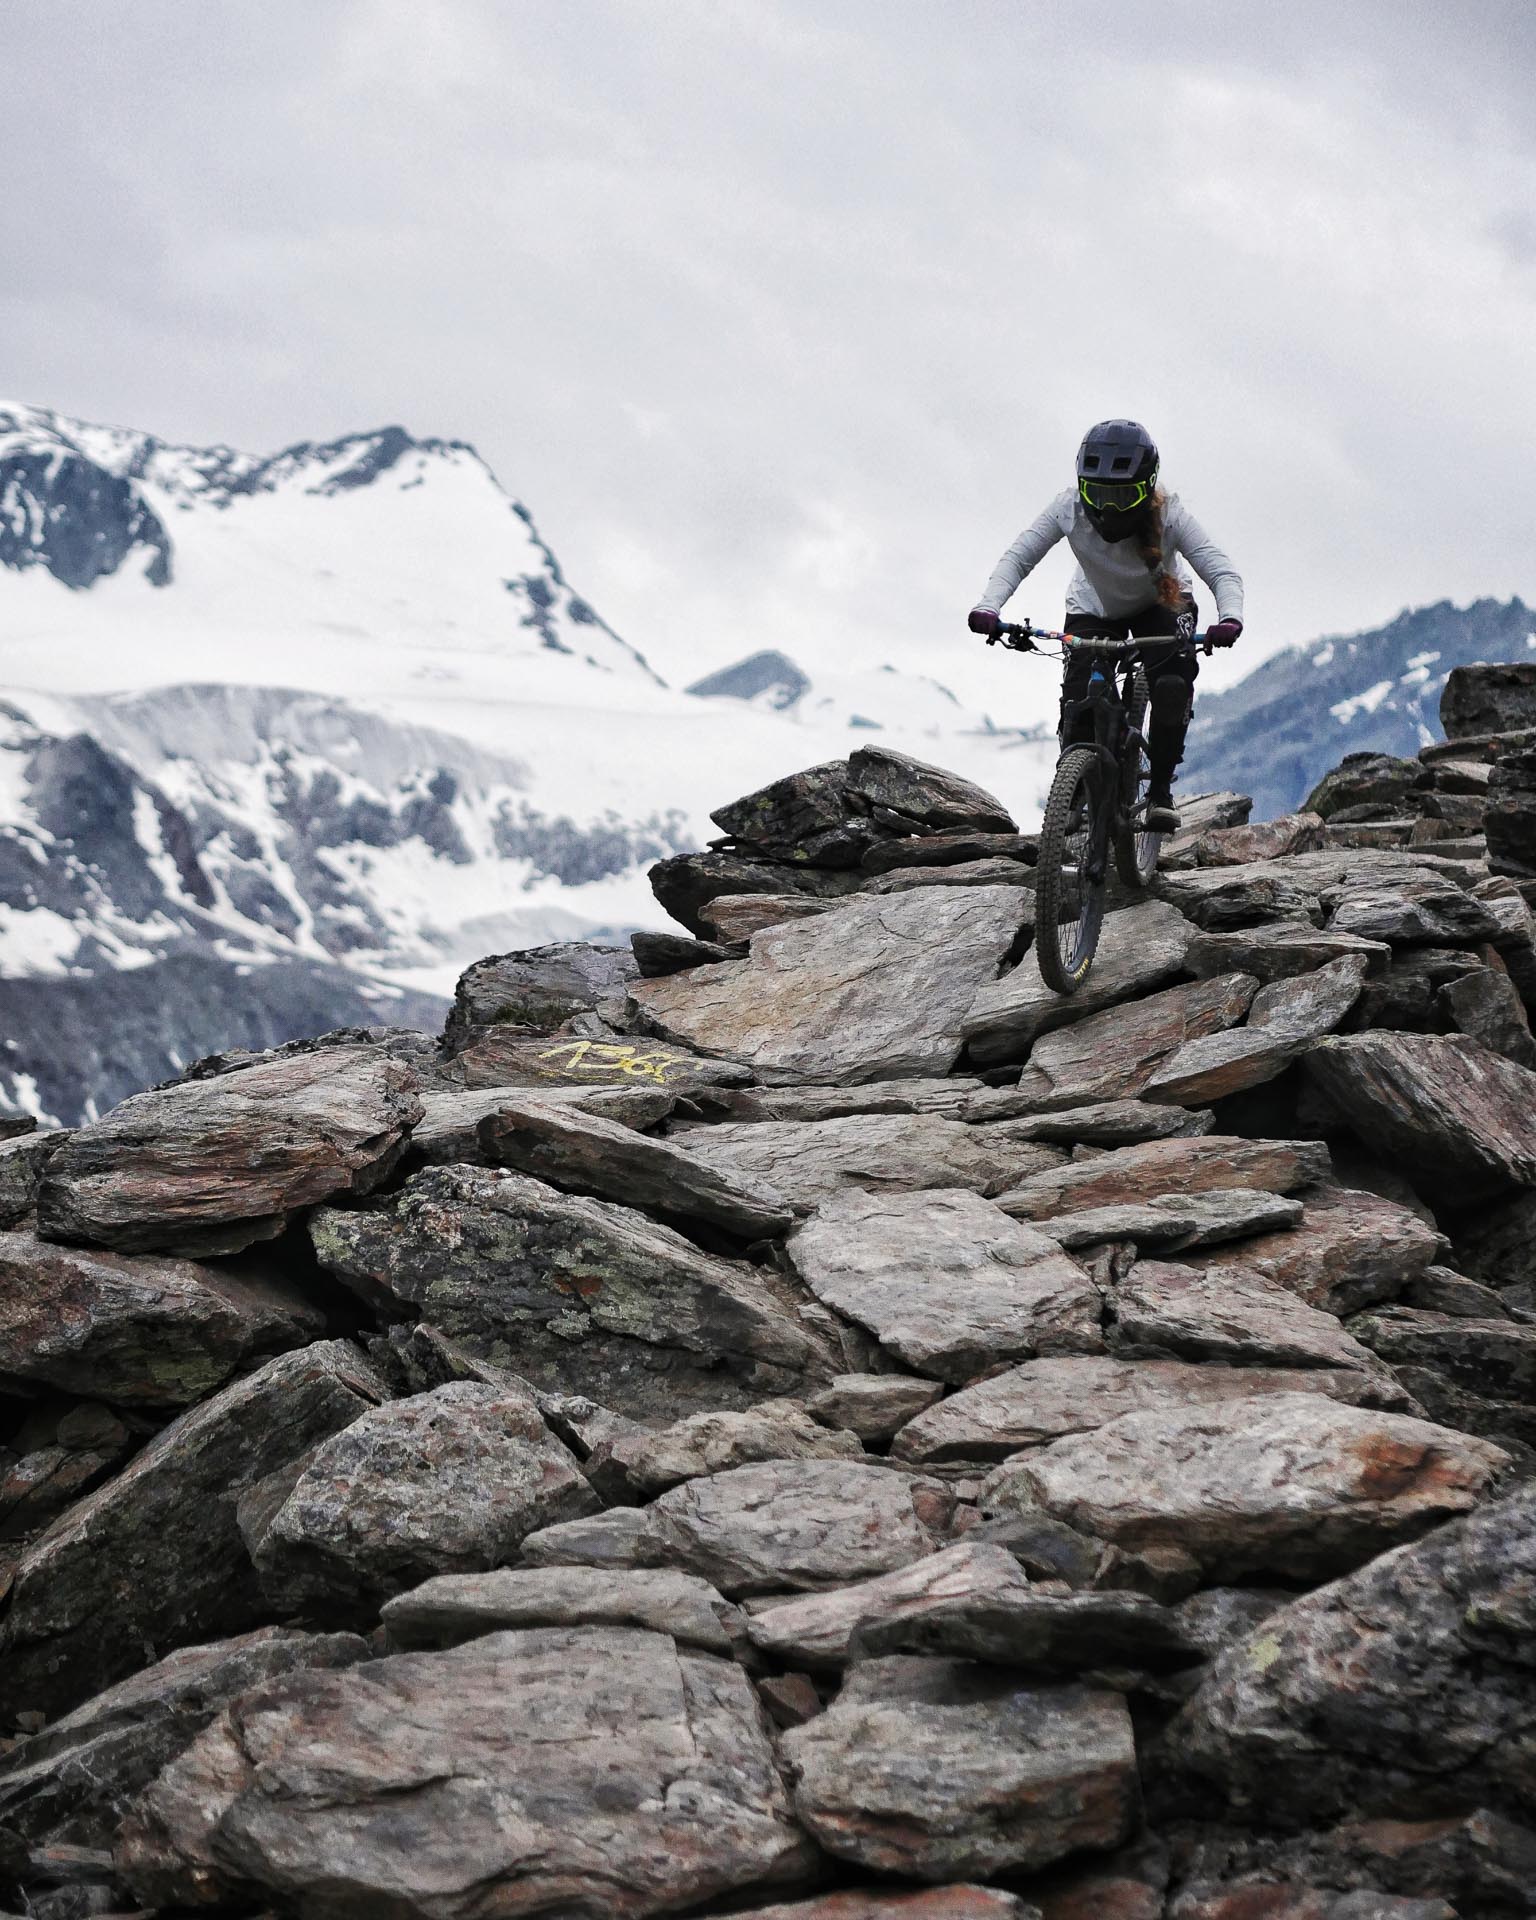 A mountainbike girl rides through rocks in the Alpine Soelden, Austria.